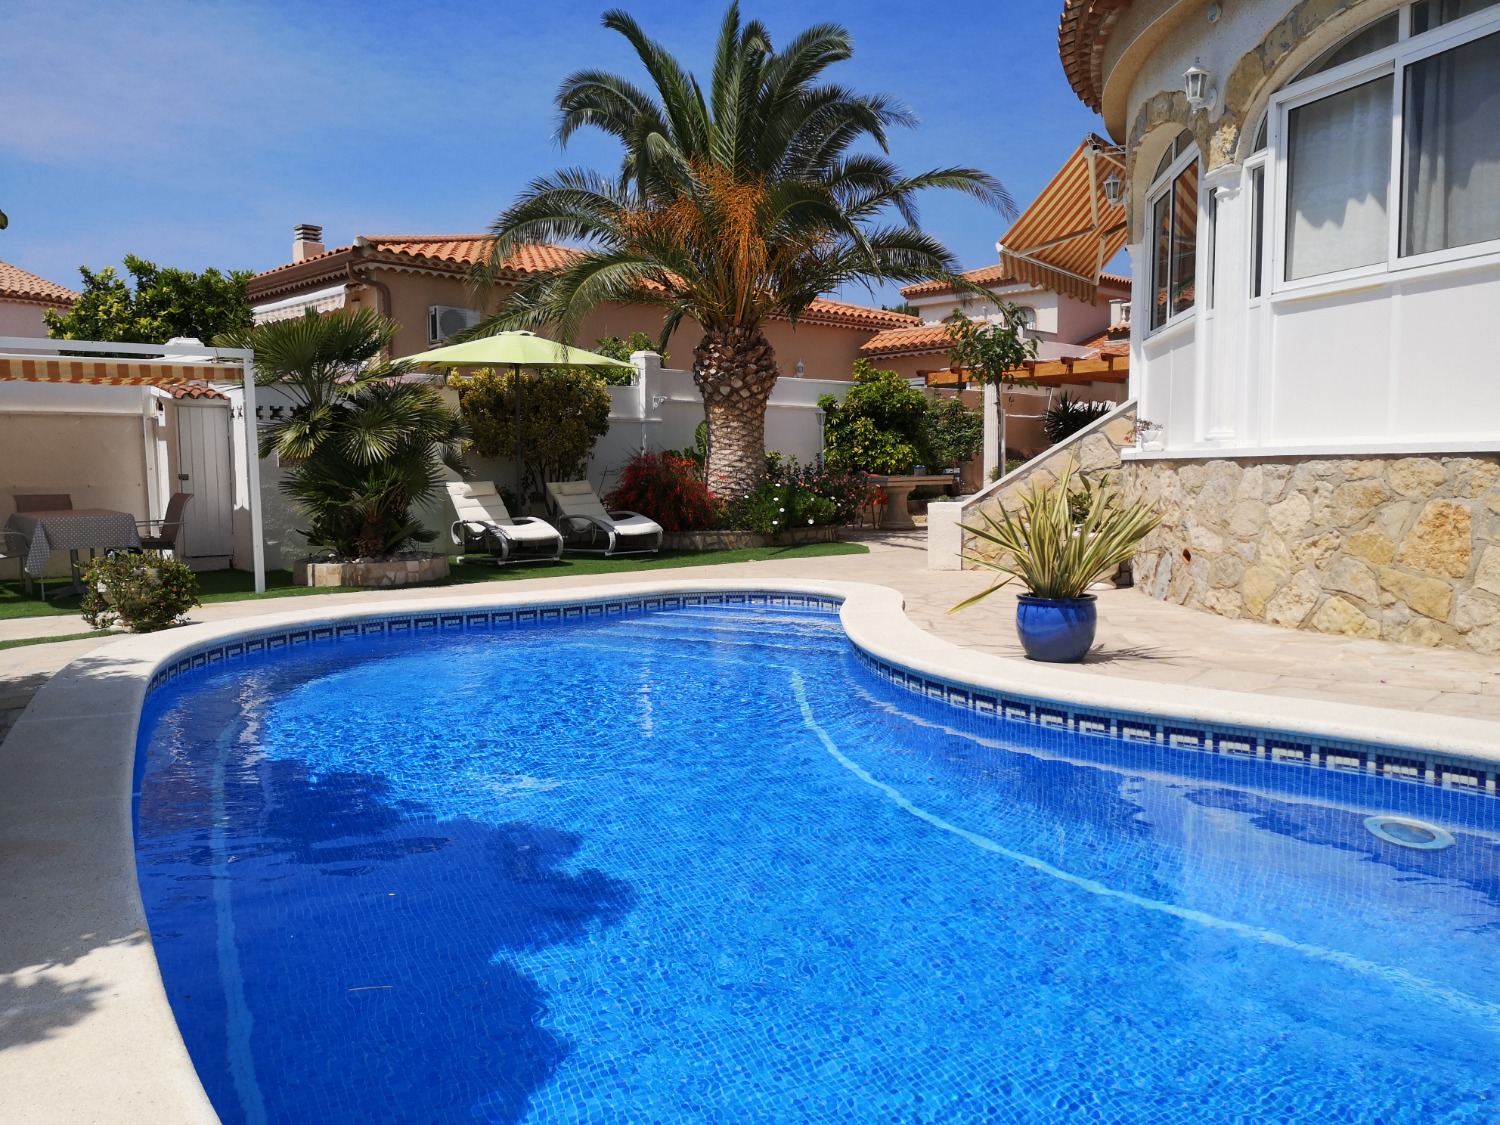 Encantadora villa con piscina privada en Miami Platja!